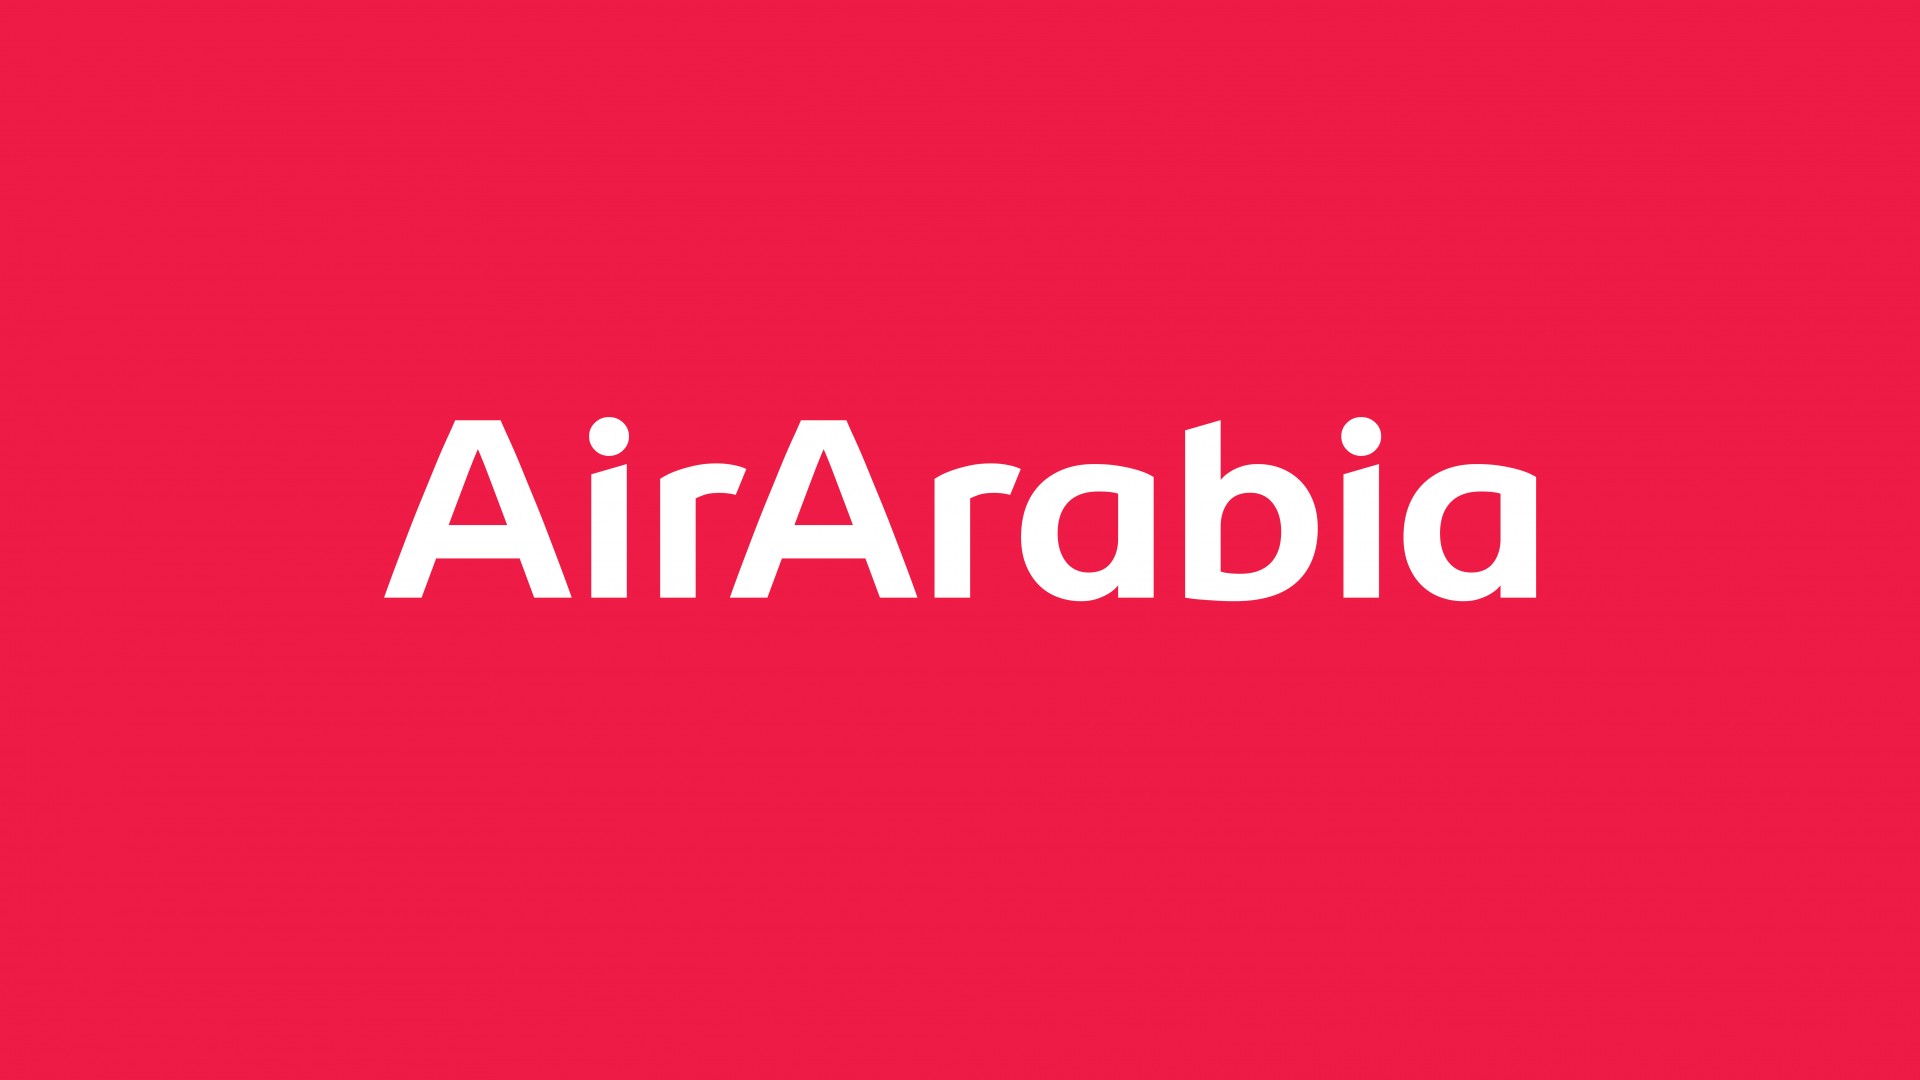 Air Arabia is not good plan for Flight